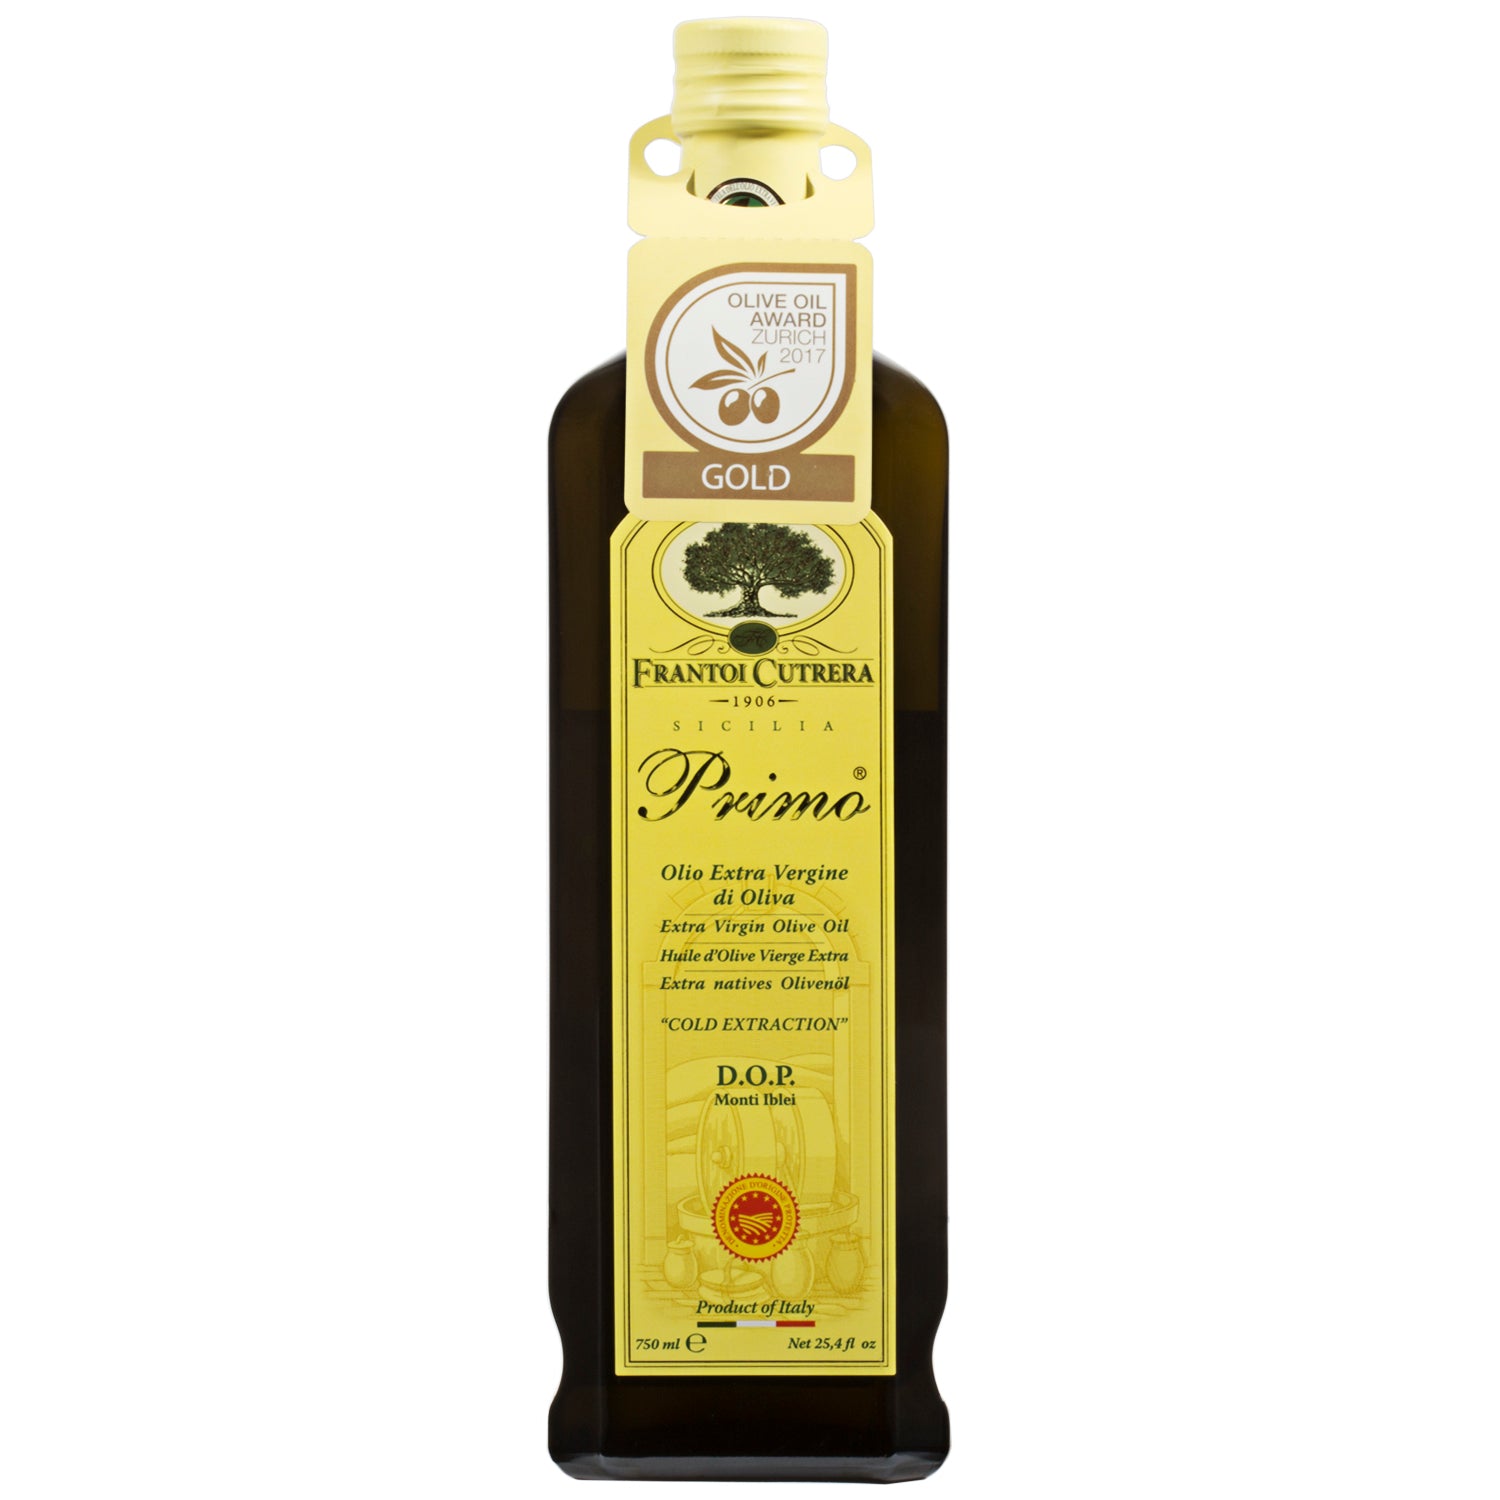 DOP (sicily) Frantoi Cutrera Primo Extra Virgin Olive Oil